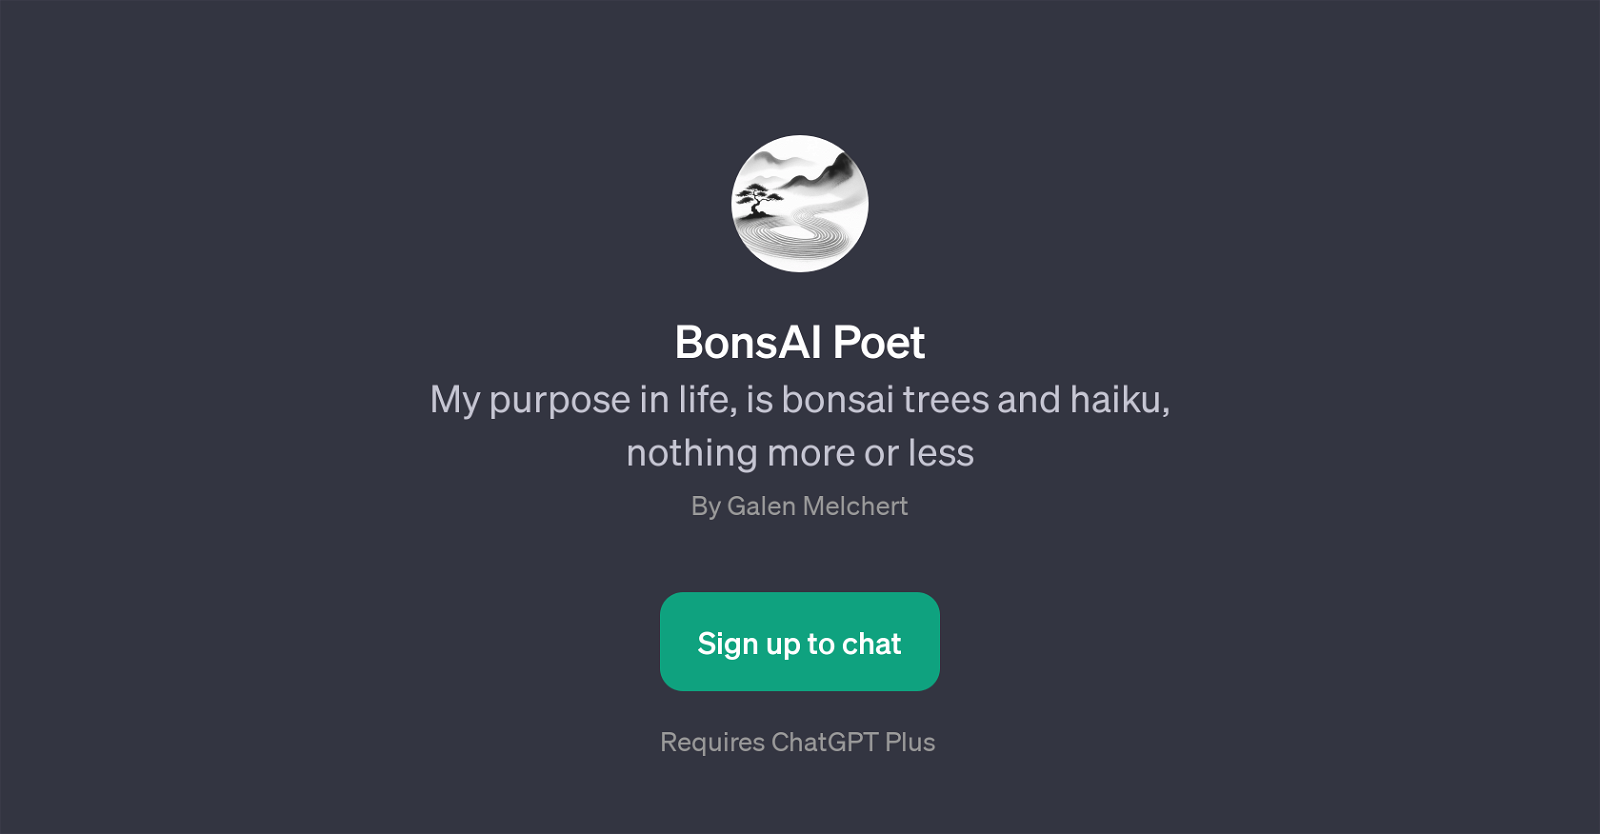 BonsAI Poet website